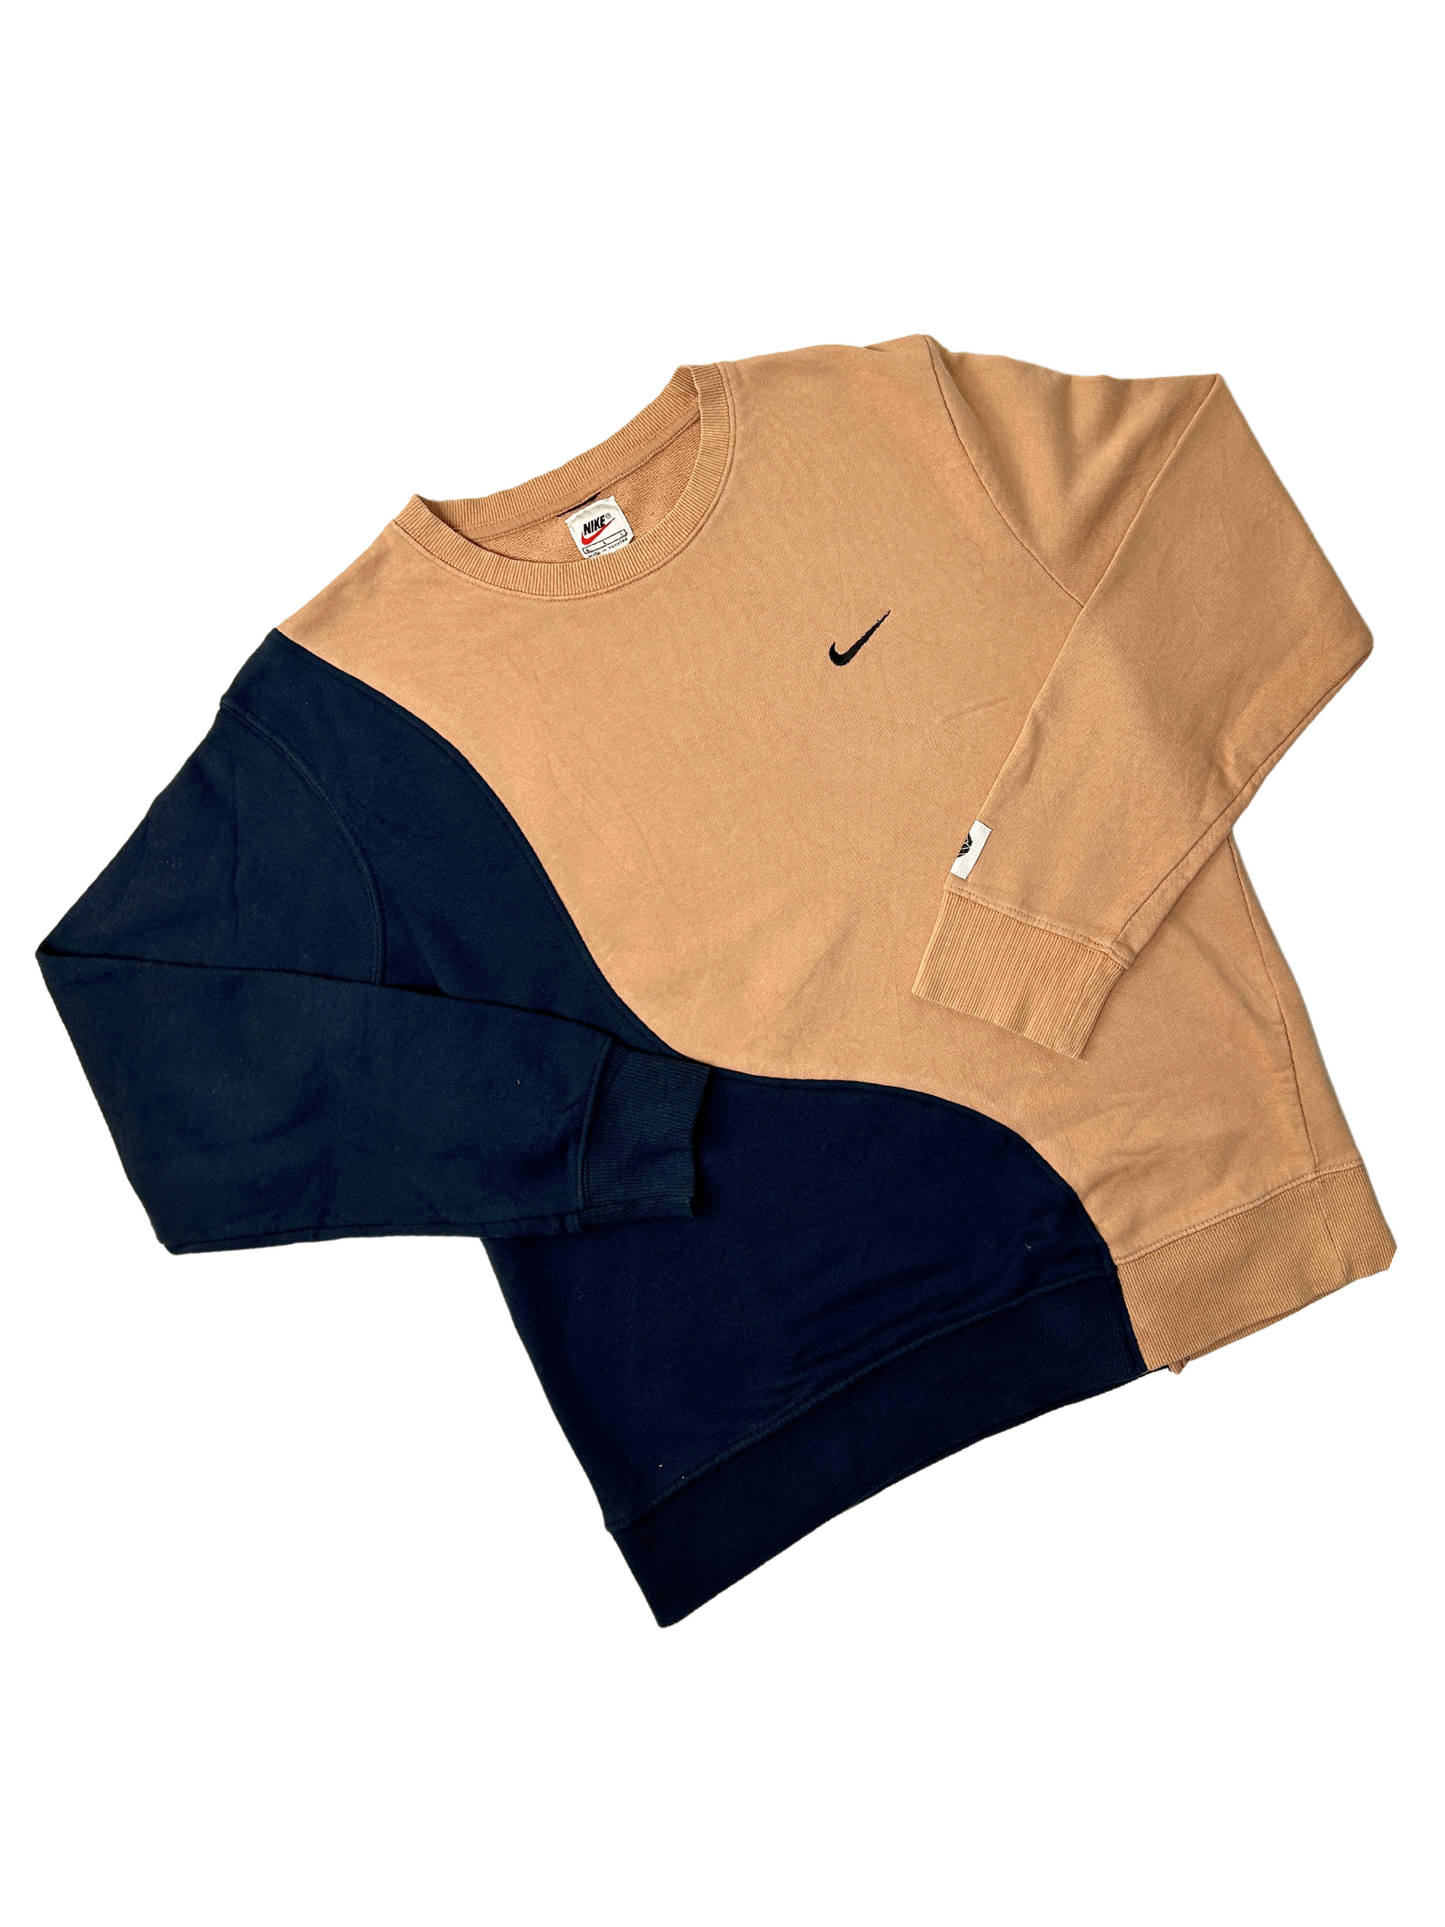 Reworked Nike Sweatshirt #6 (L)